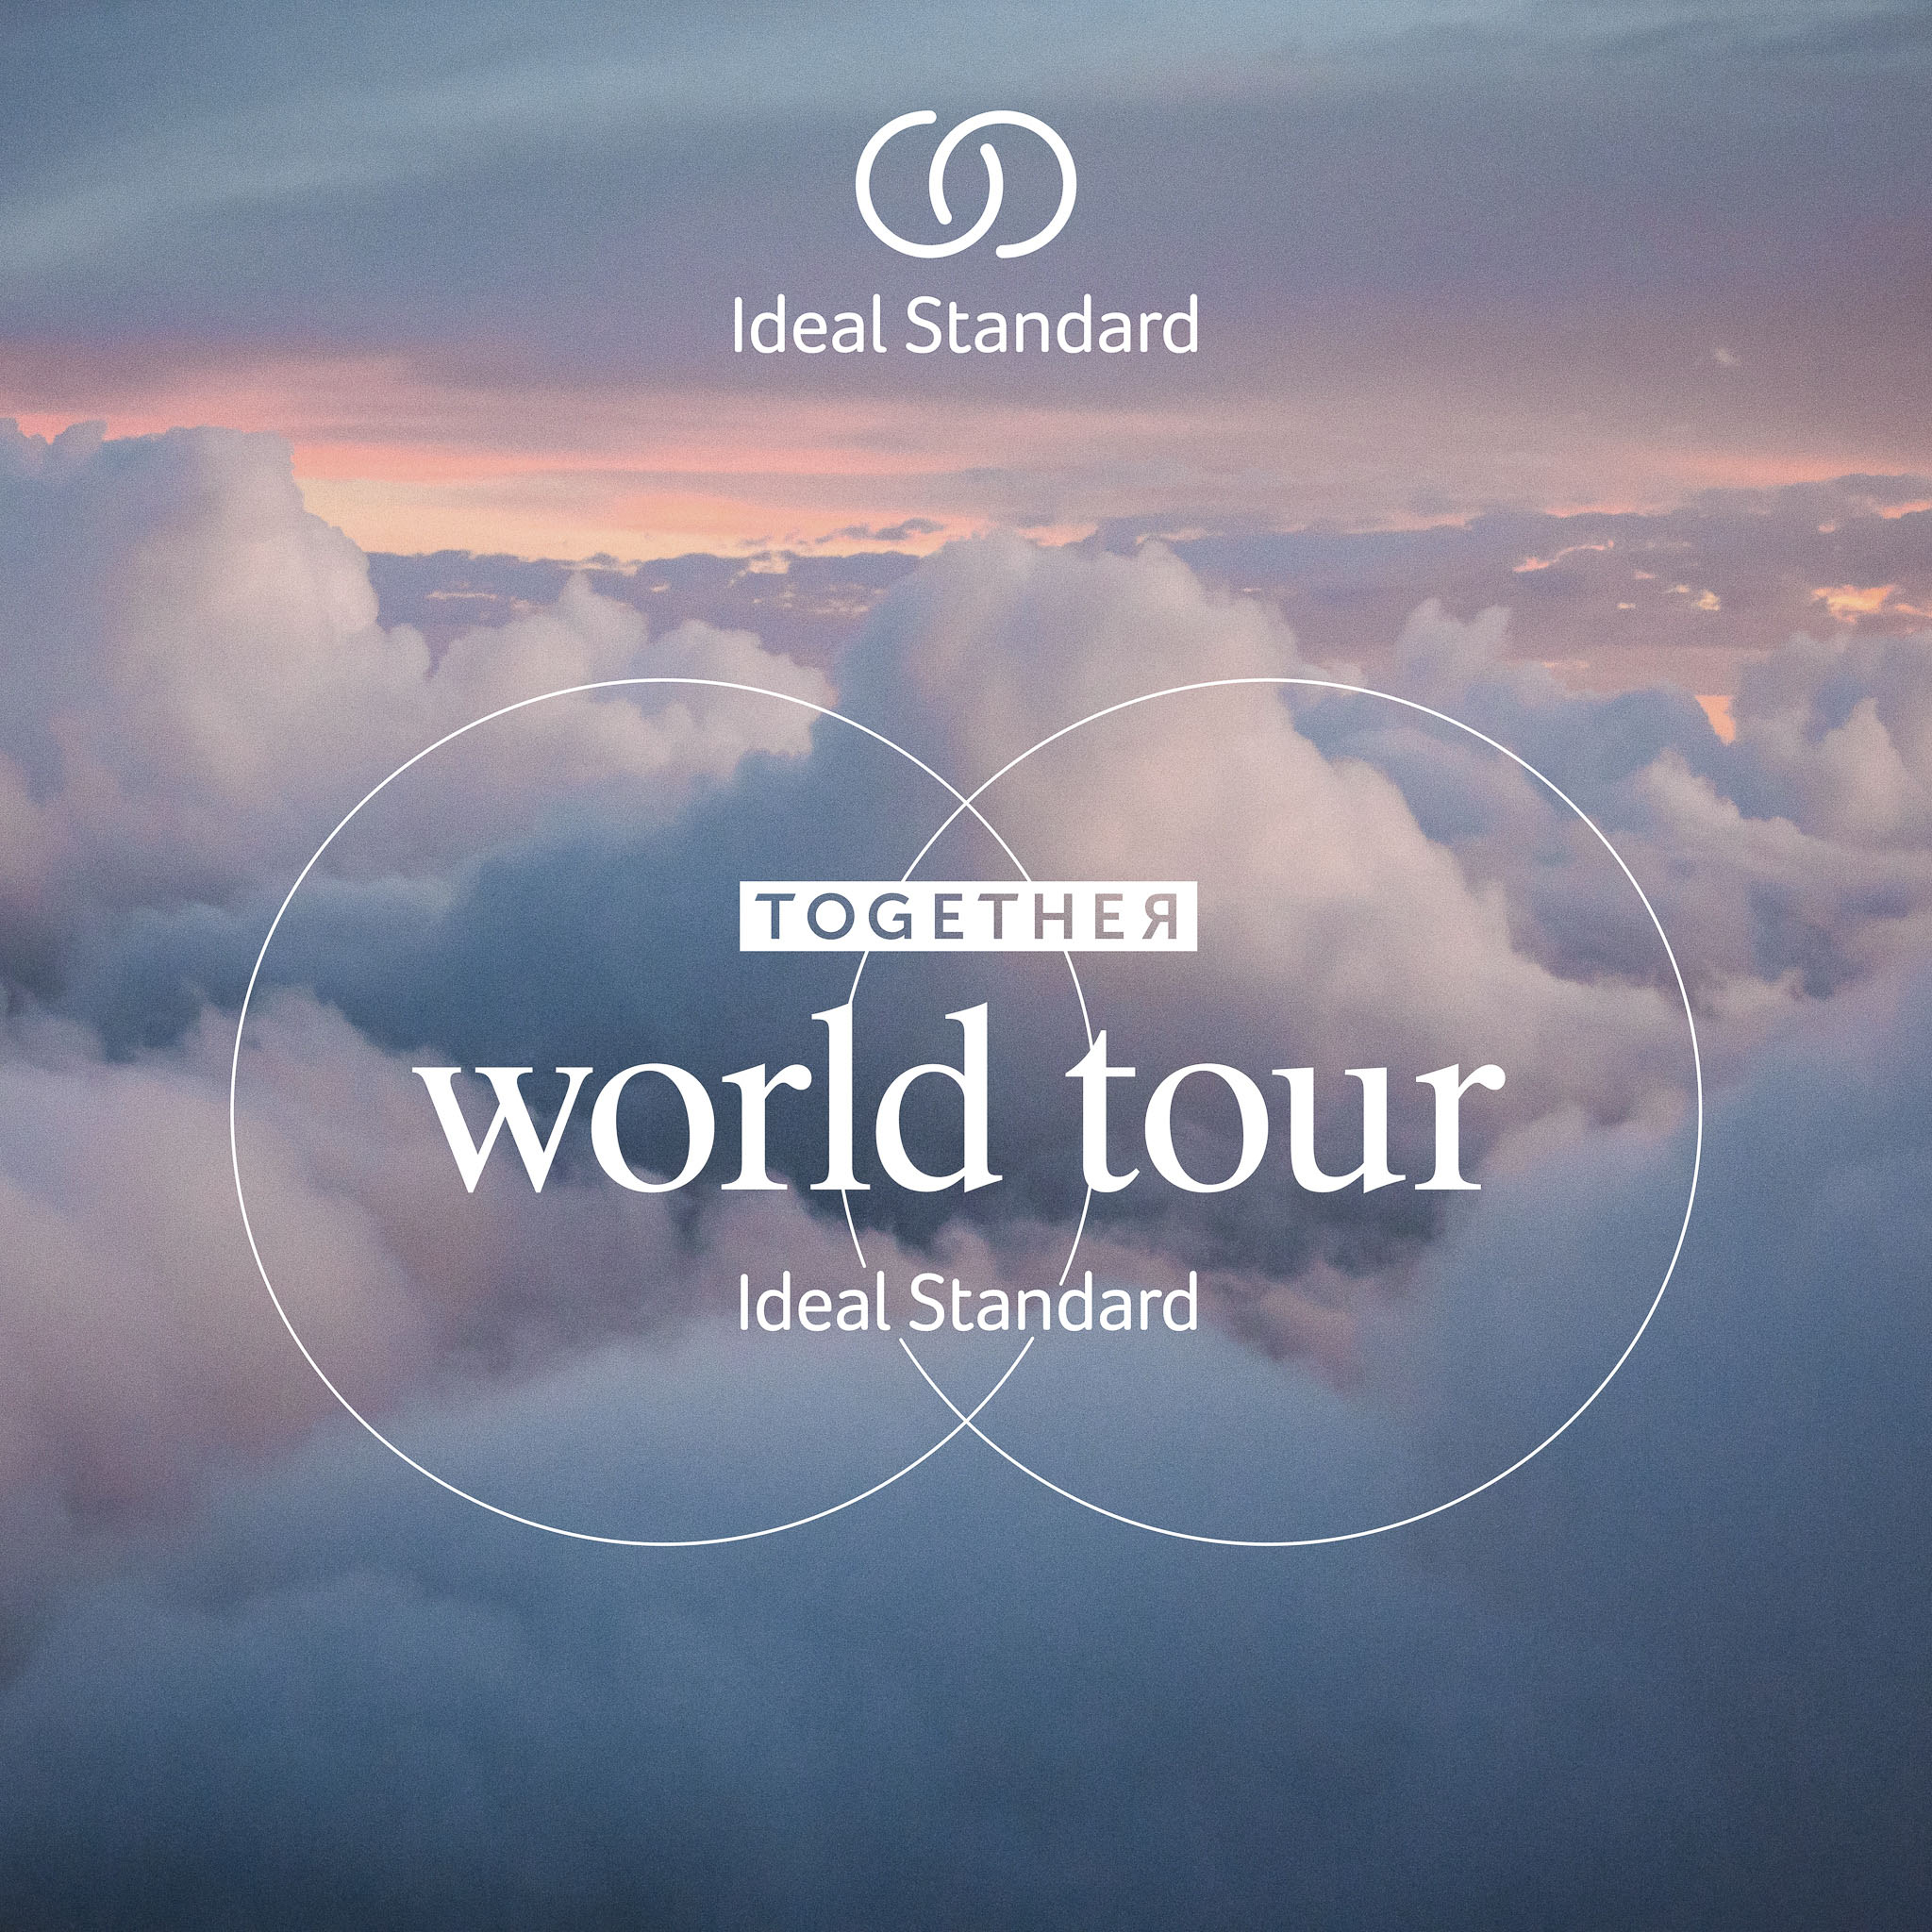 Ideal Standard kicks off Together World Tour in Milan @IdealStandardUK